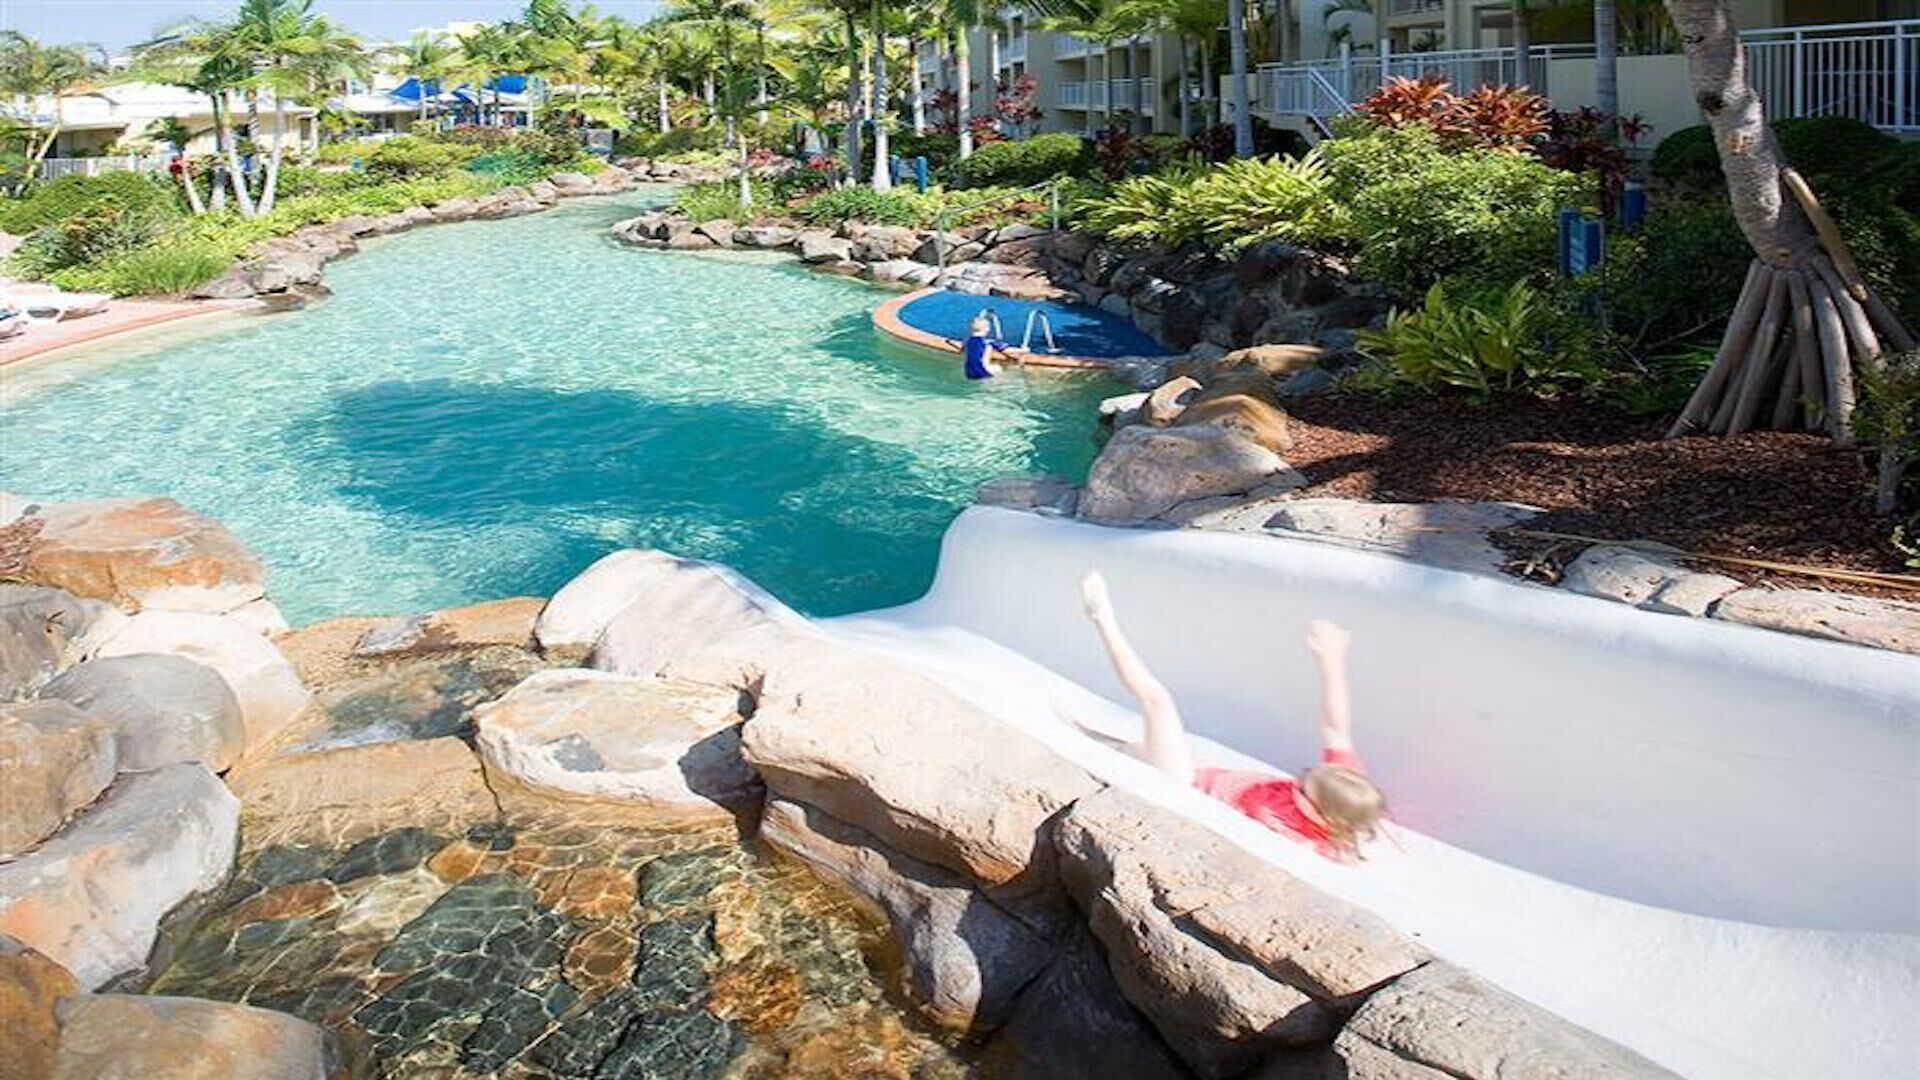 Alex Beach Resort has all for a Great Sunshine Coast Family